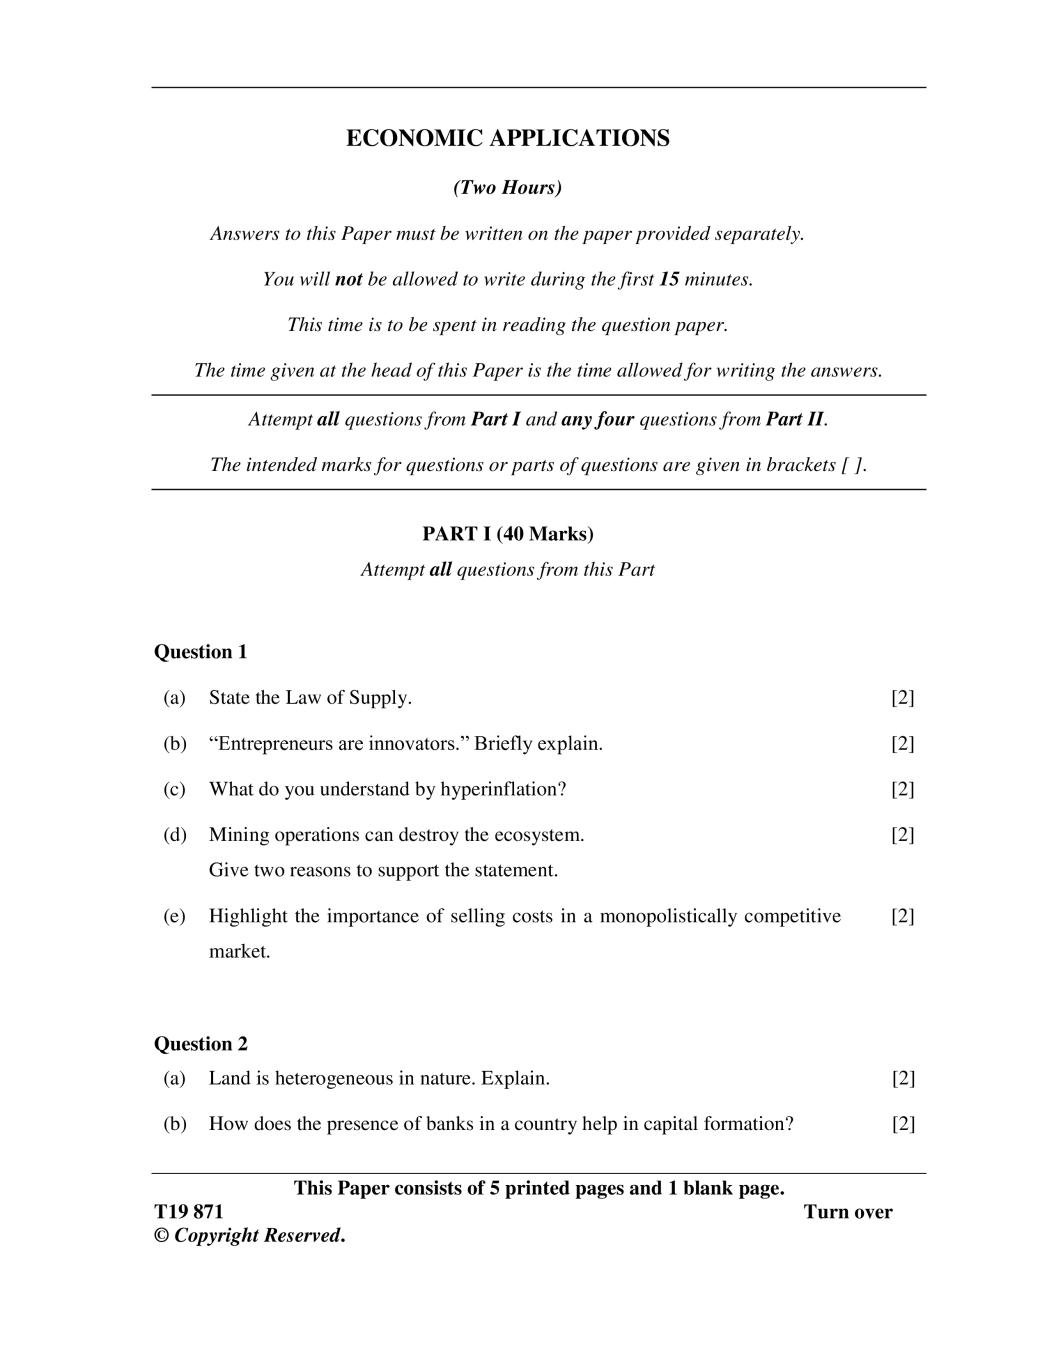 ICSE Class 10 Question Paper 2019 for Economic Applications  - Page 1